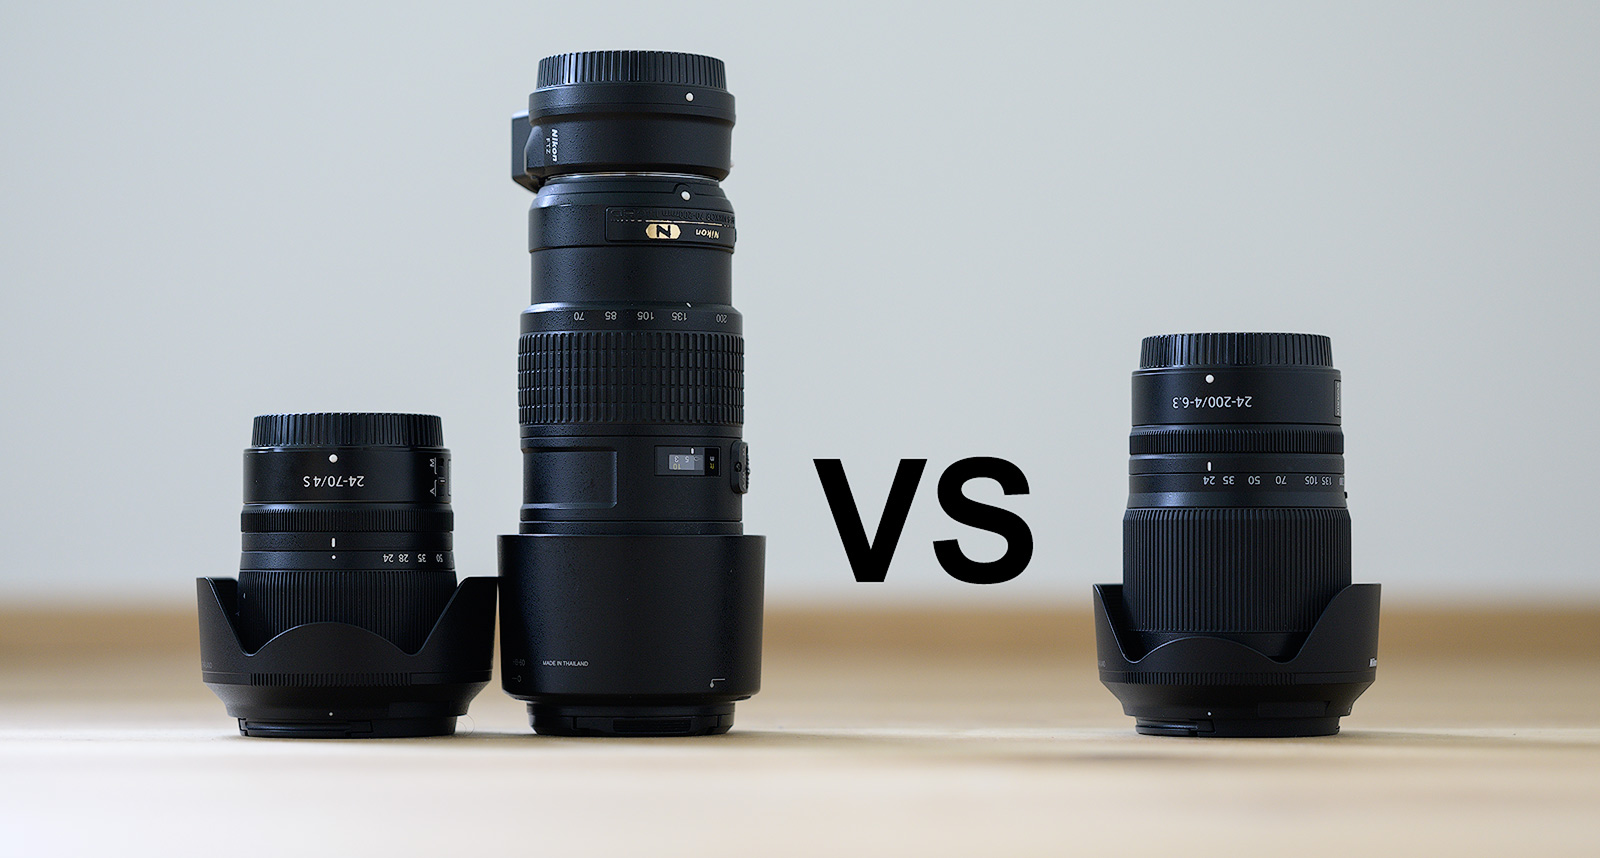 Nikon NIKKOR Z 24-200mm f/4-6.3 VR lens review in real life